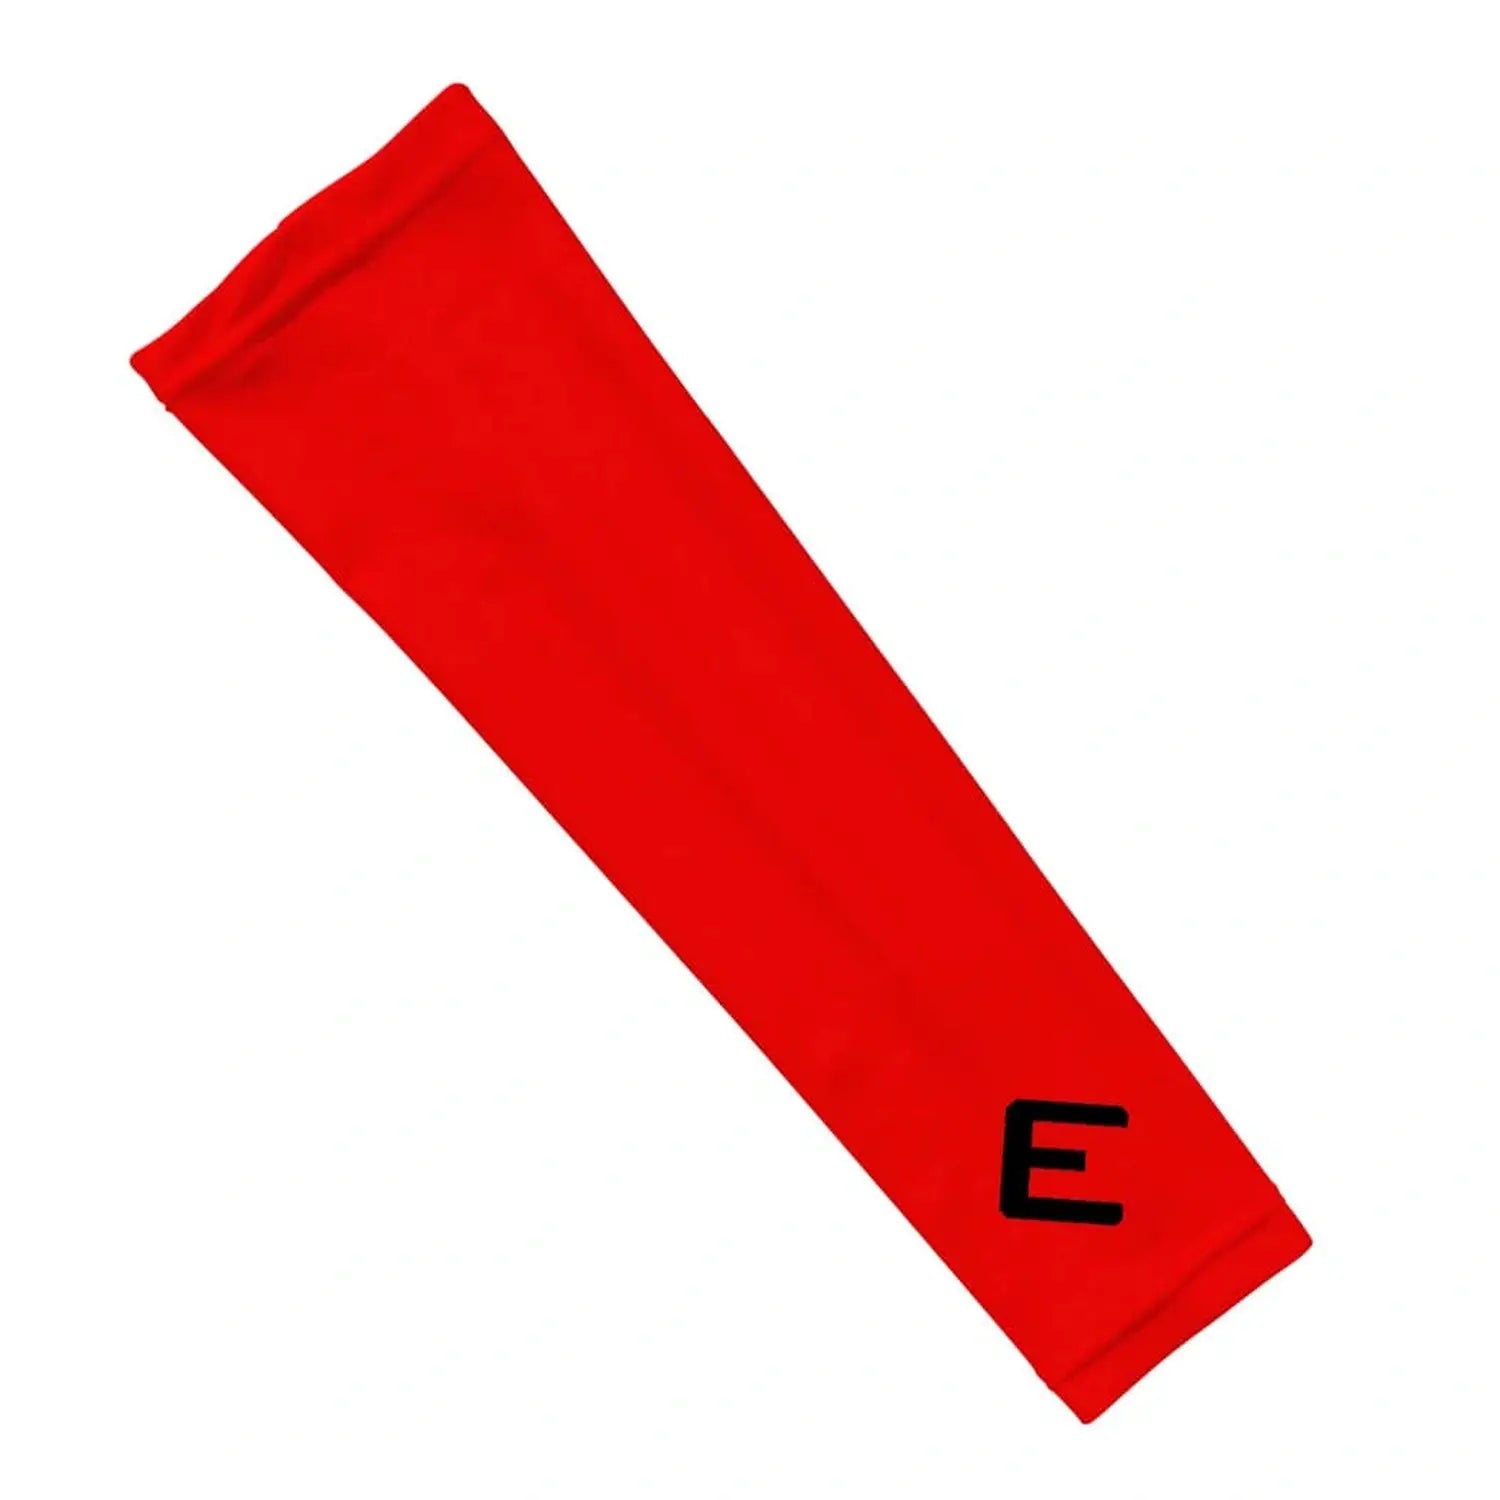 Elite Athletic Gear Red Arm Sleeve kaufen bei HighPowered.ch